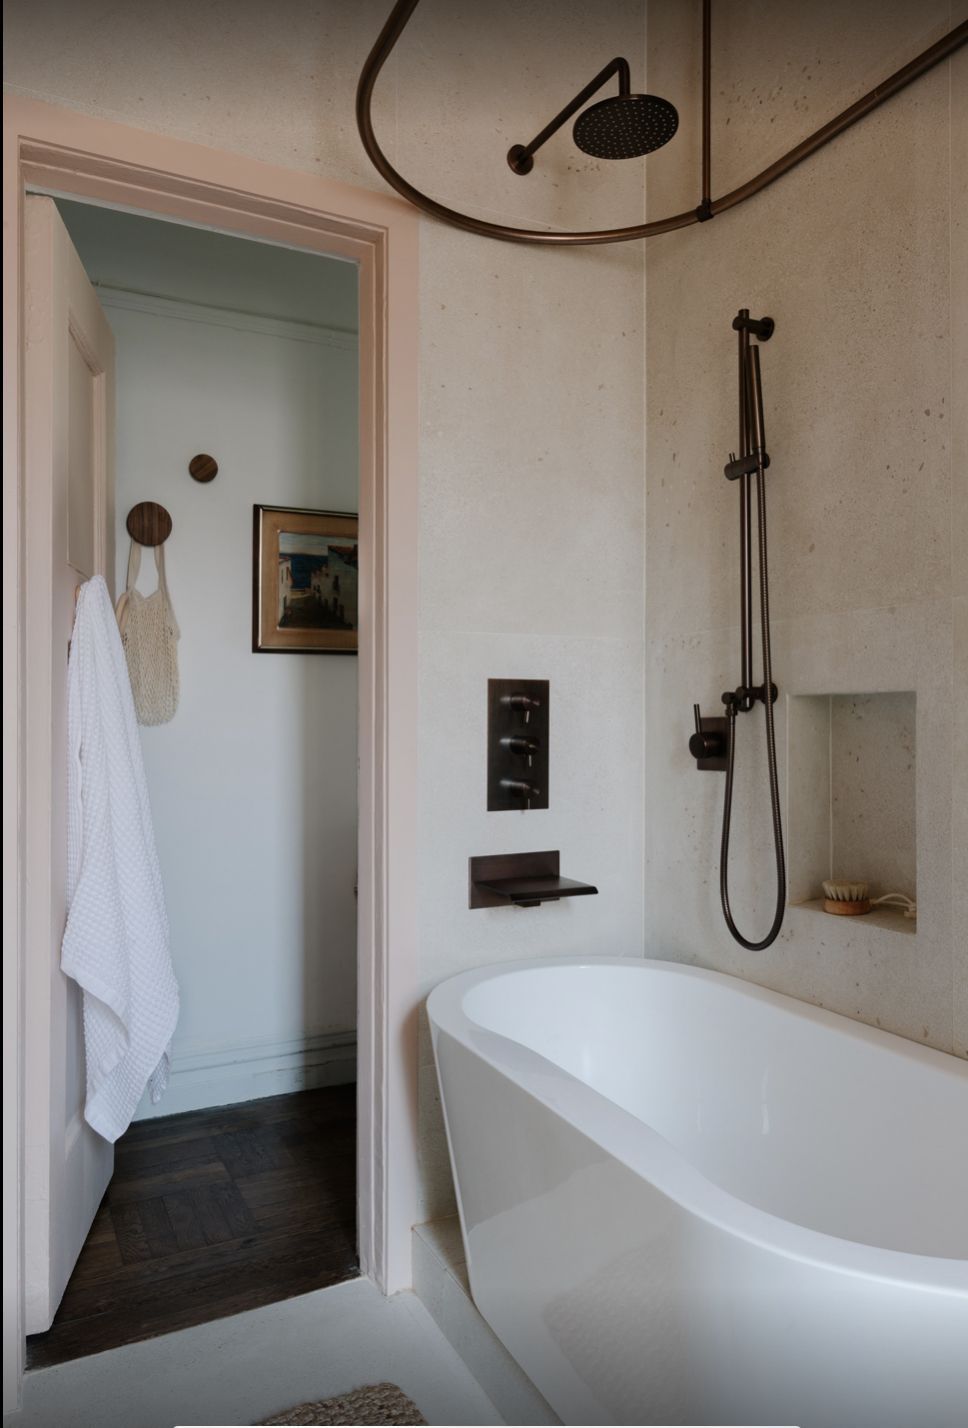 55 Small Bathroom Design Ideas, Top 10 Design Trends 2023 for Small Spaces